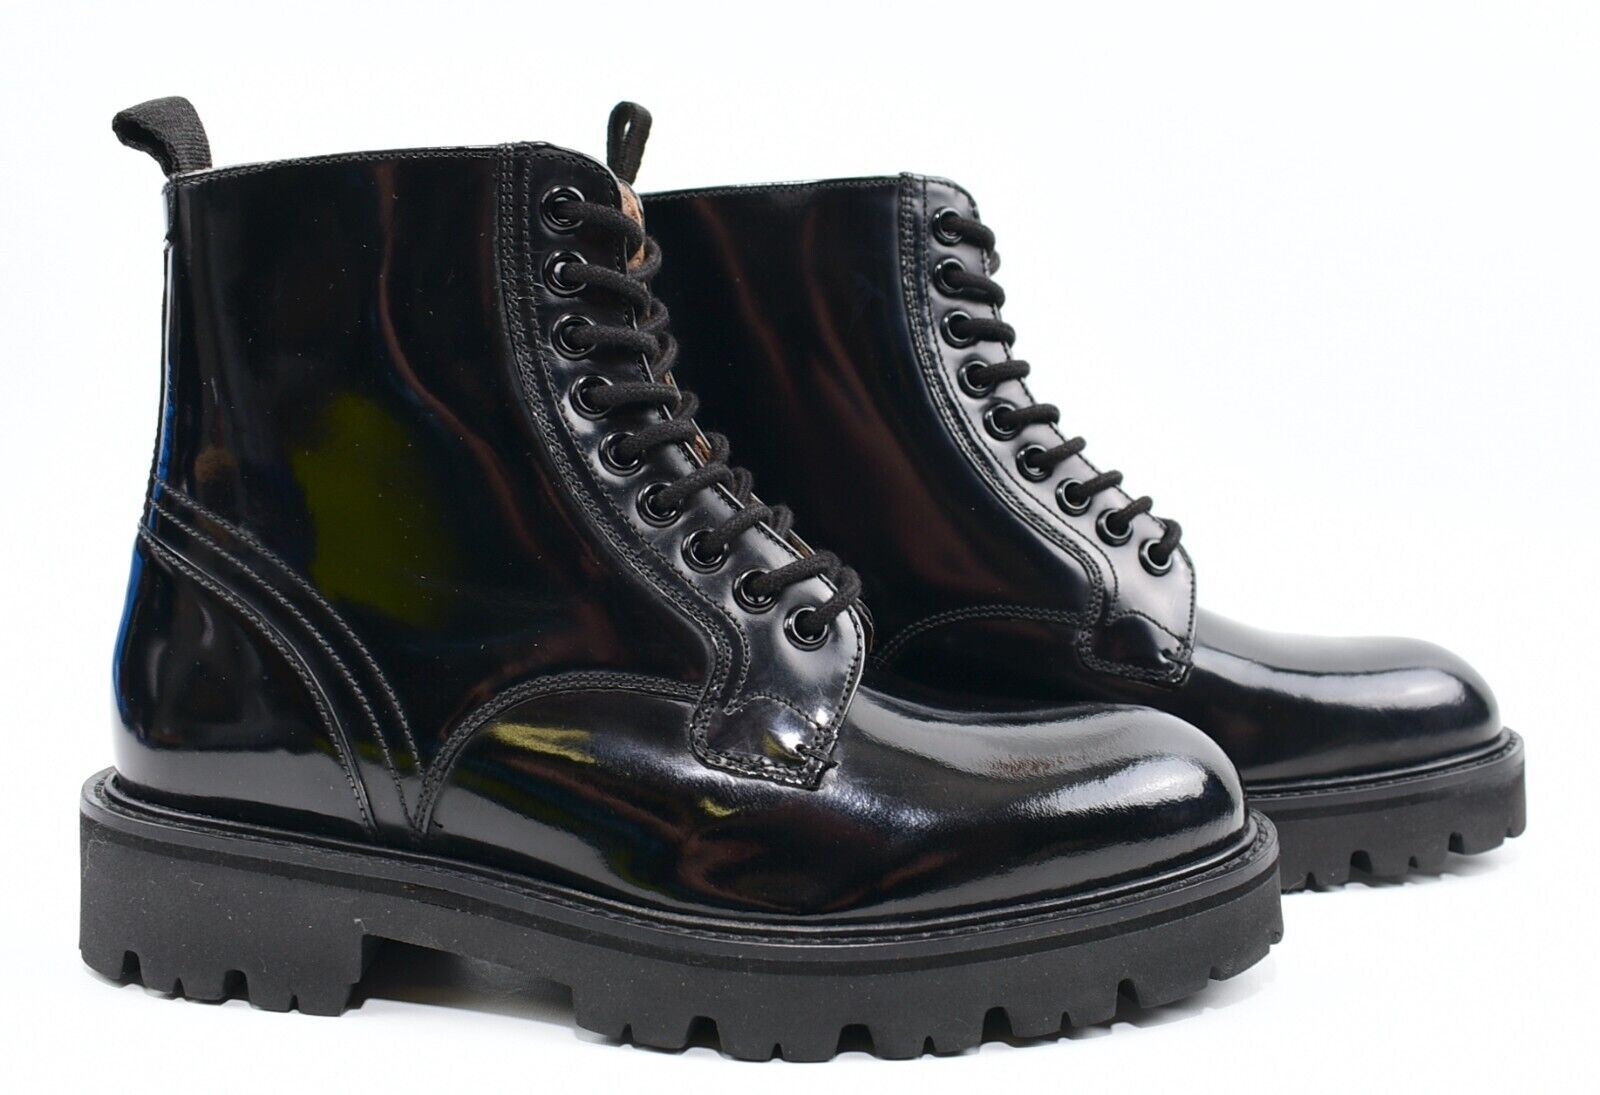 TED BAKER Women's MASCY Ankle Boots, Genuine Leather, Black, size UK 4 / EU 37